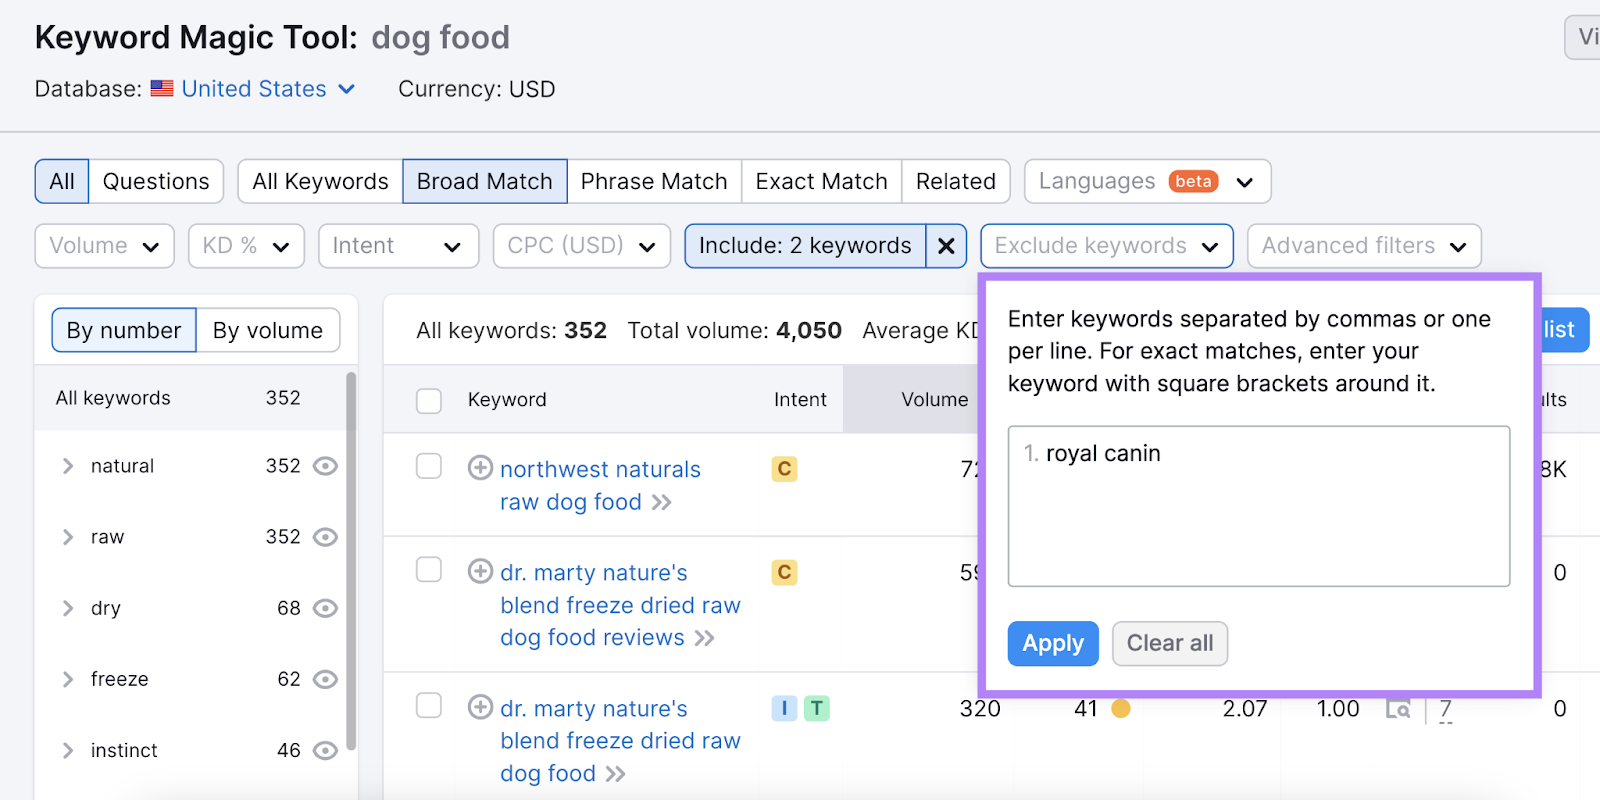 Mot-clé « royal canin » saisi sous le filtre « Exclure les mots-clés » dans Keyword Magic Tool